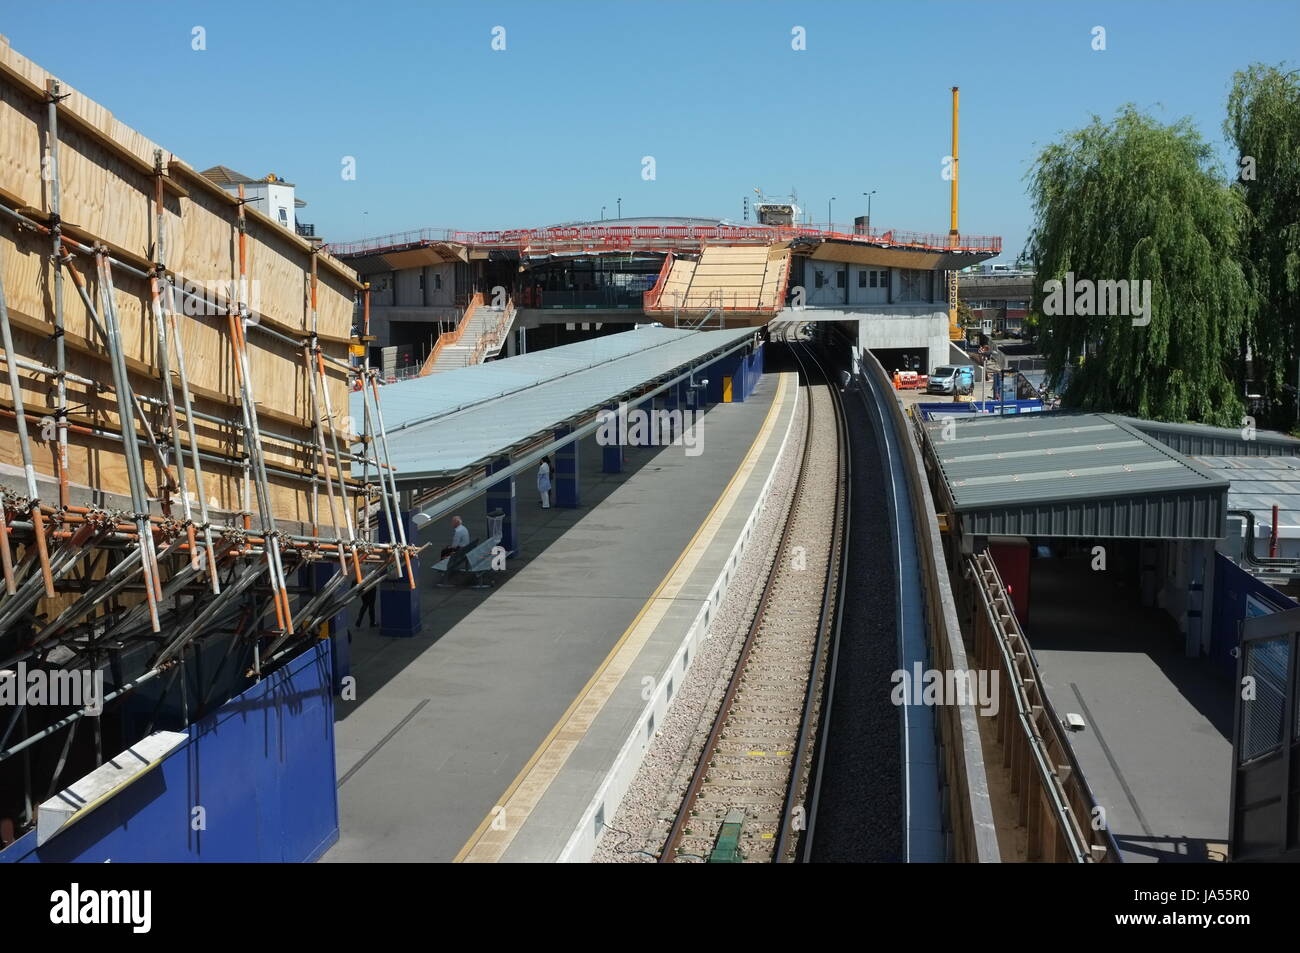 Elizabeth line (Crossrail) construction work underway at Abbey Wood railway station. South-east London, England, United Kingdom. May 25, 2017. Stock Photo